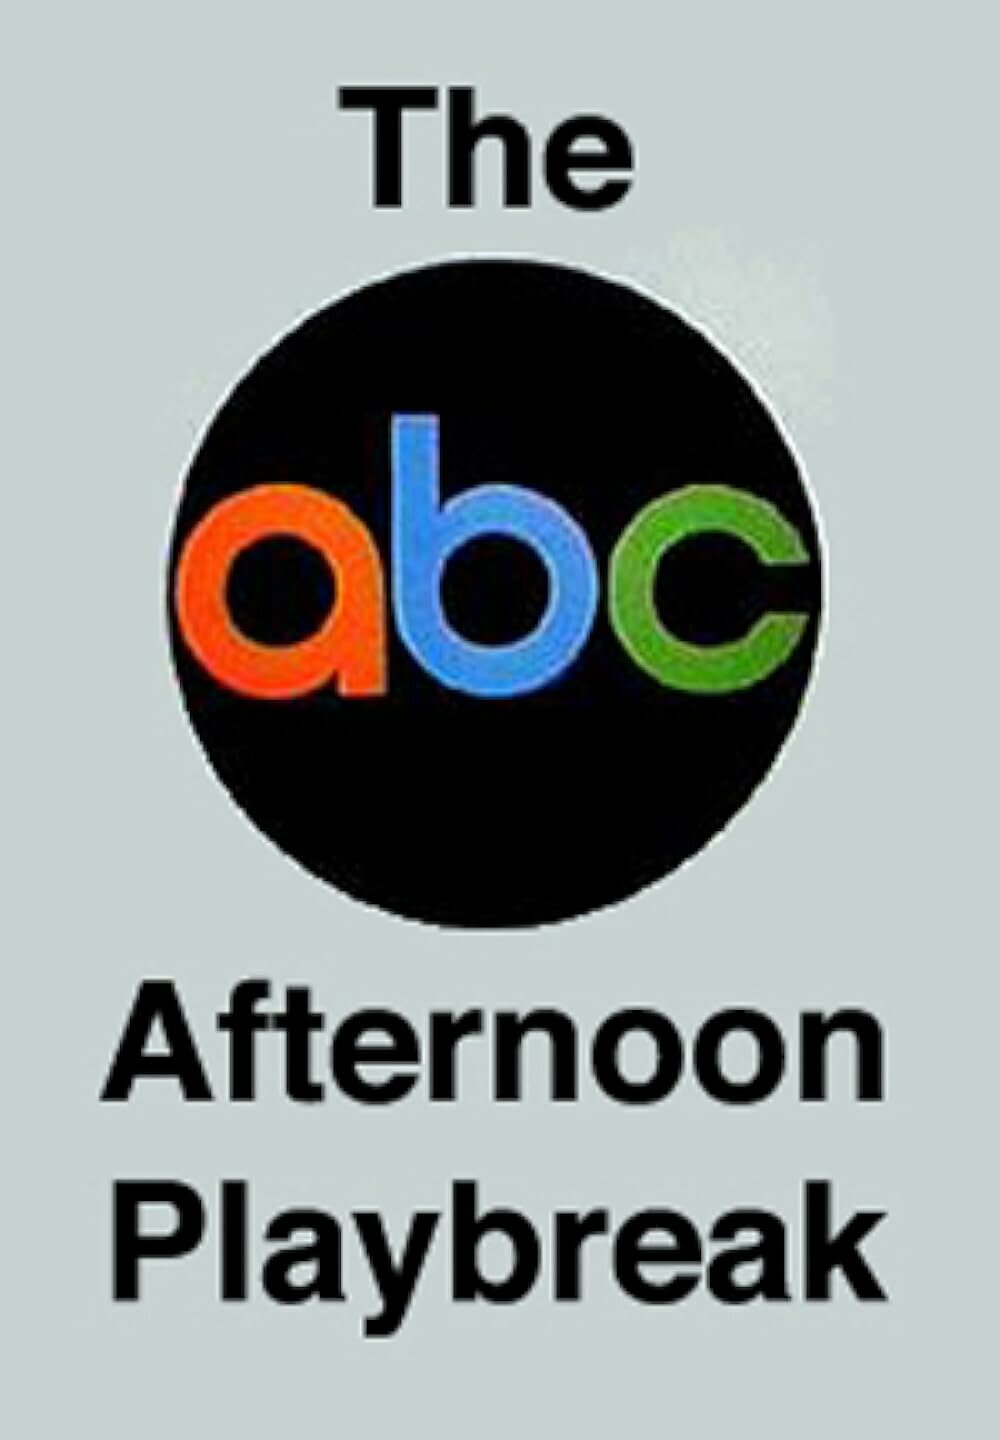 The ABC Afternoon Playbreak ne zaman